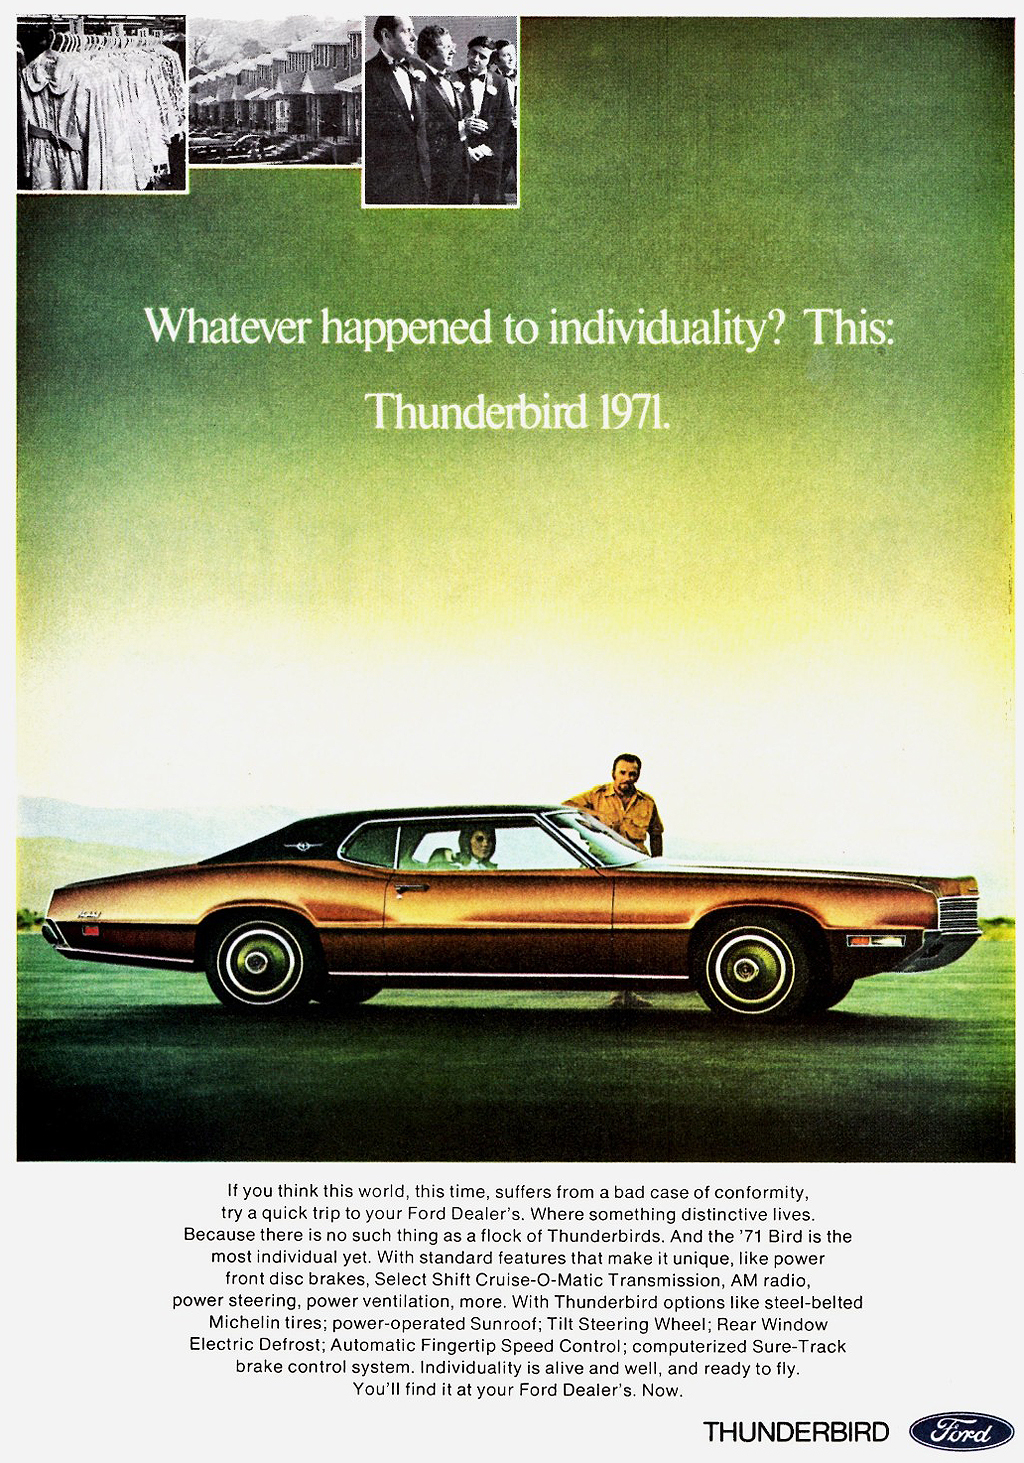 1971 Thunderbird b